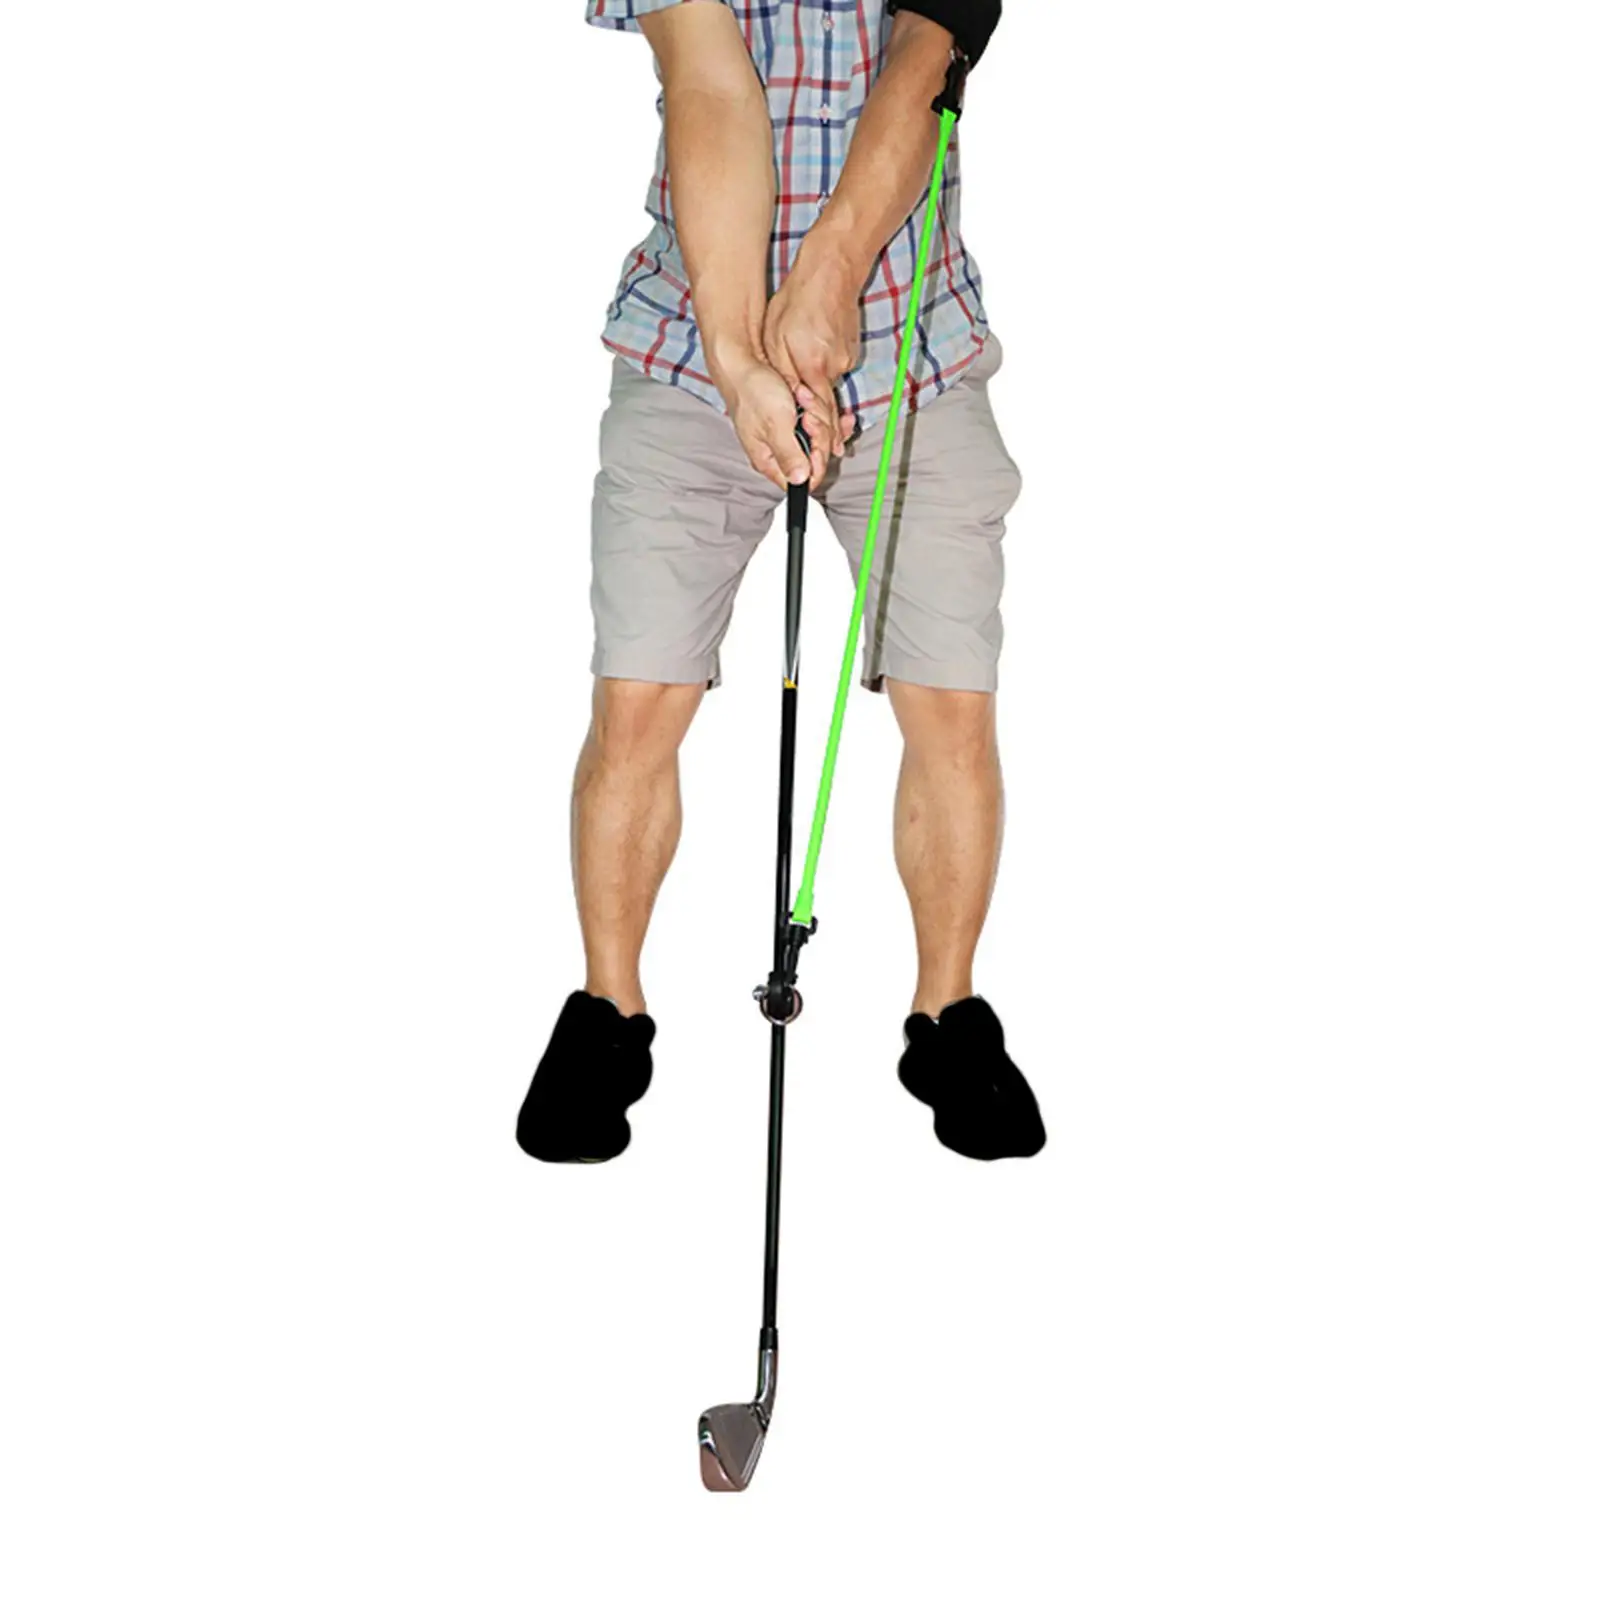 Golf Swing Trainer, Lightweight Easily Install for Golf Club